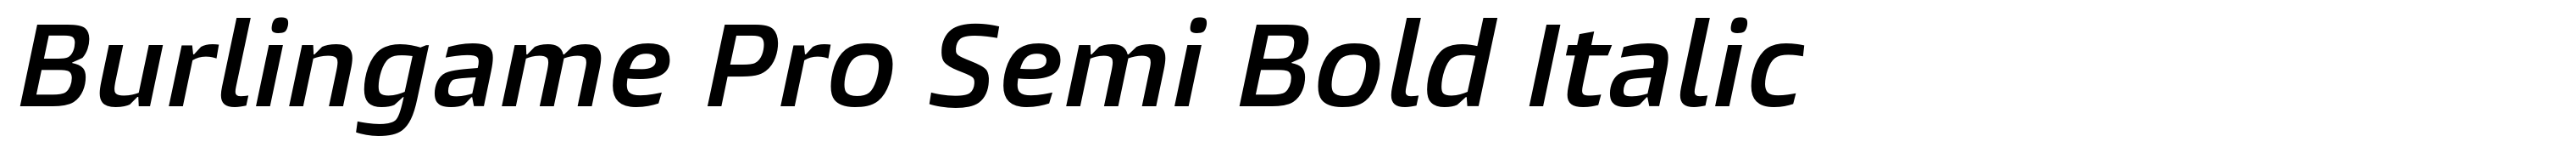 Burlingame Pro Semi Bold Italic